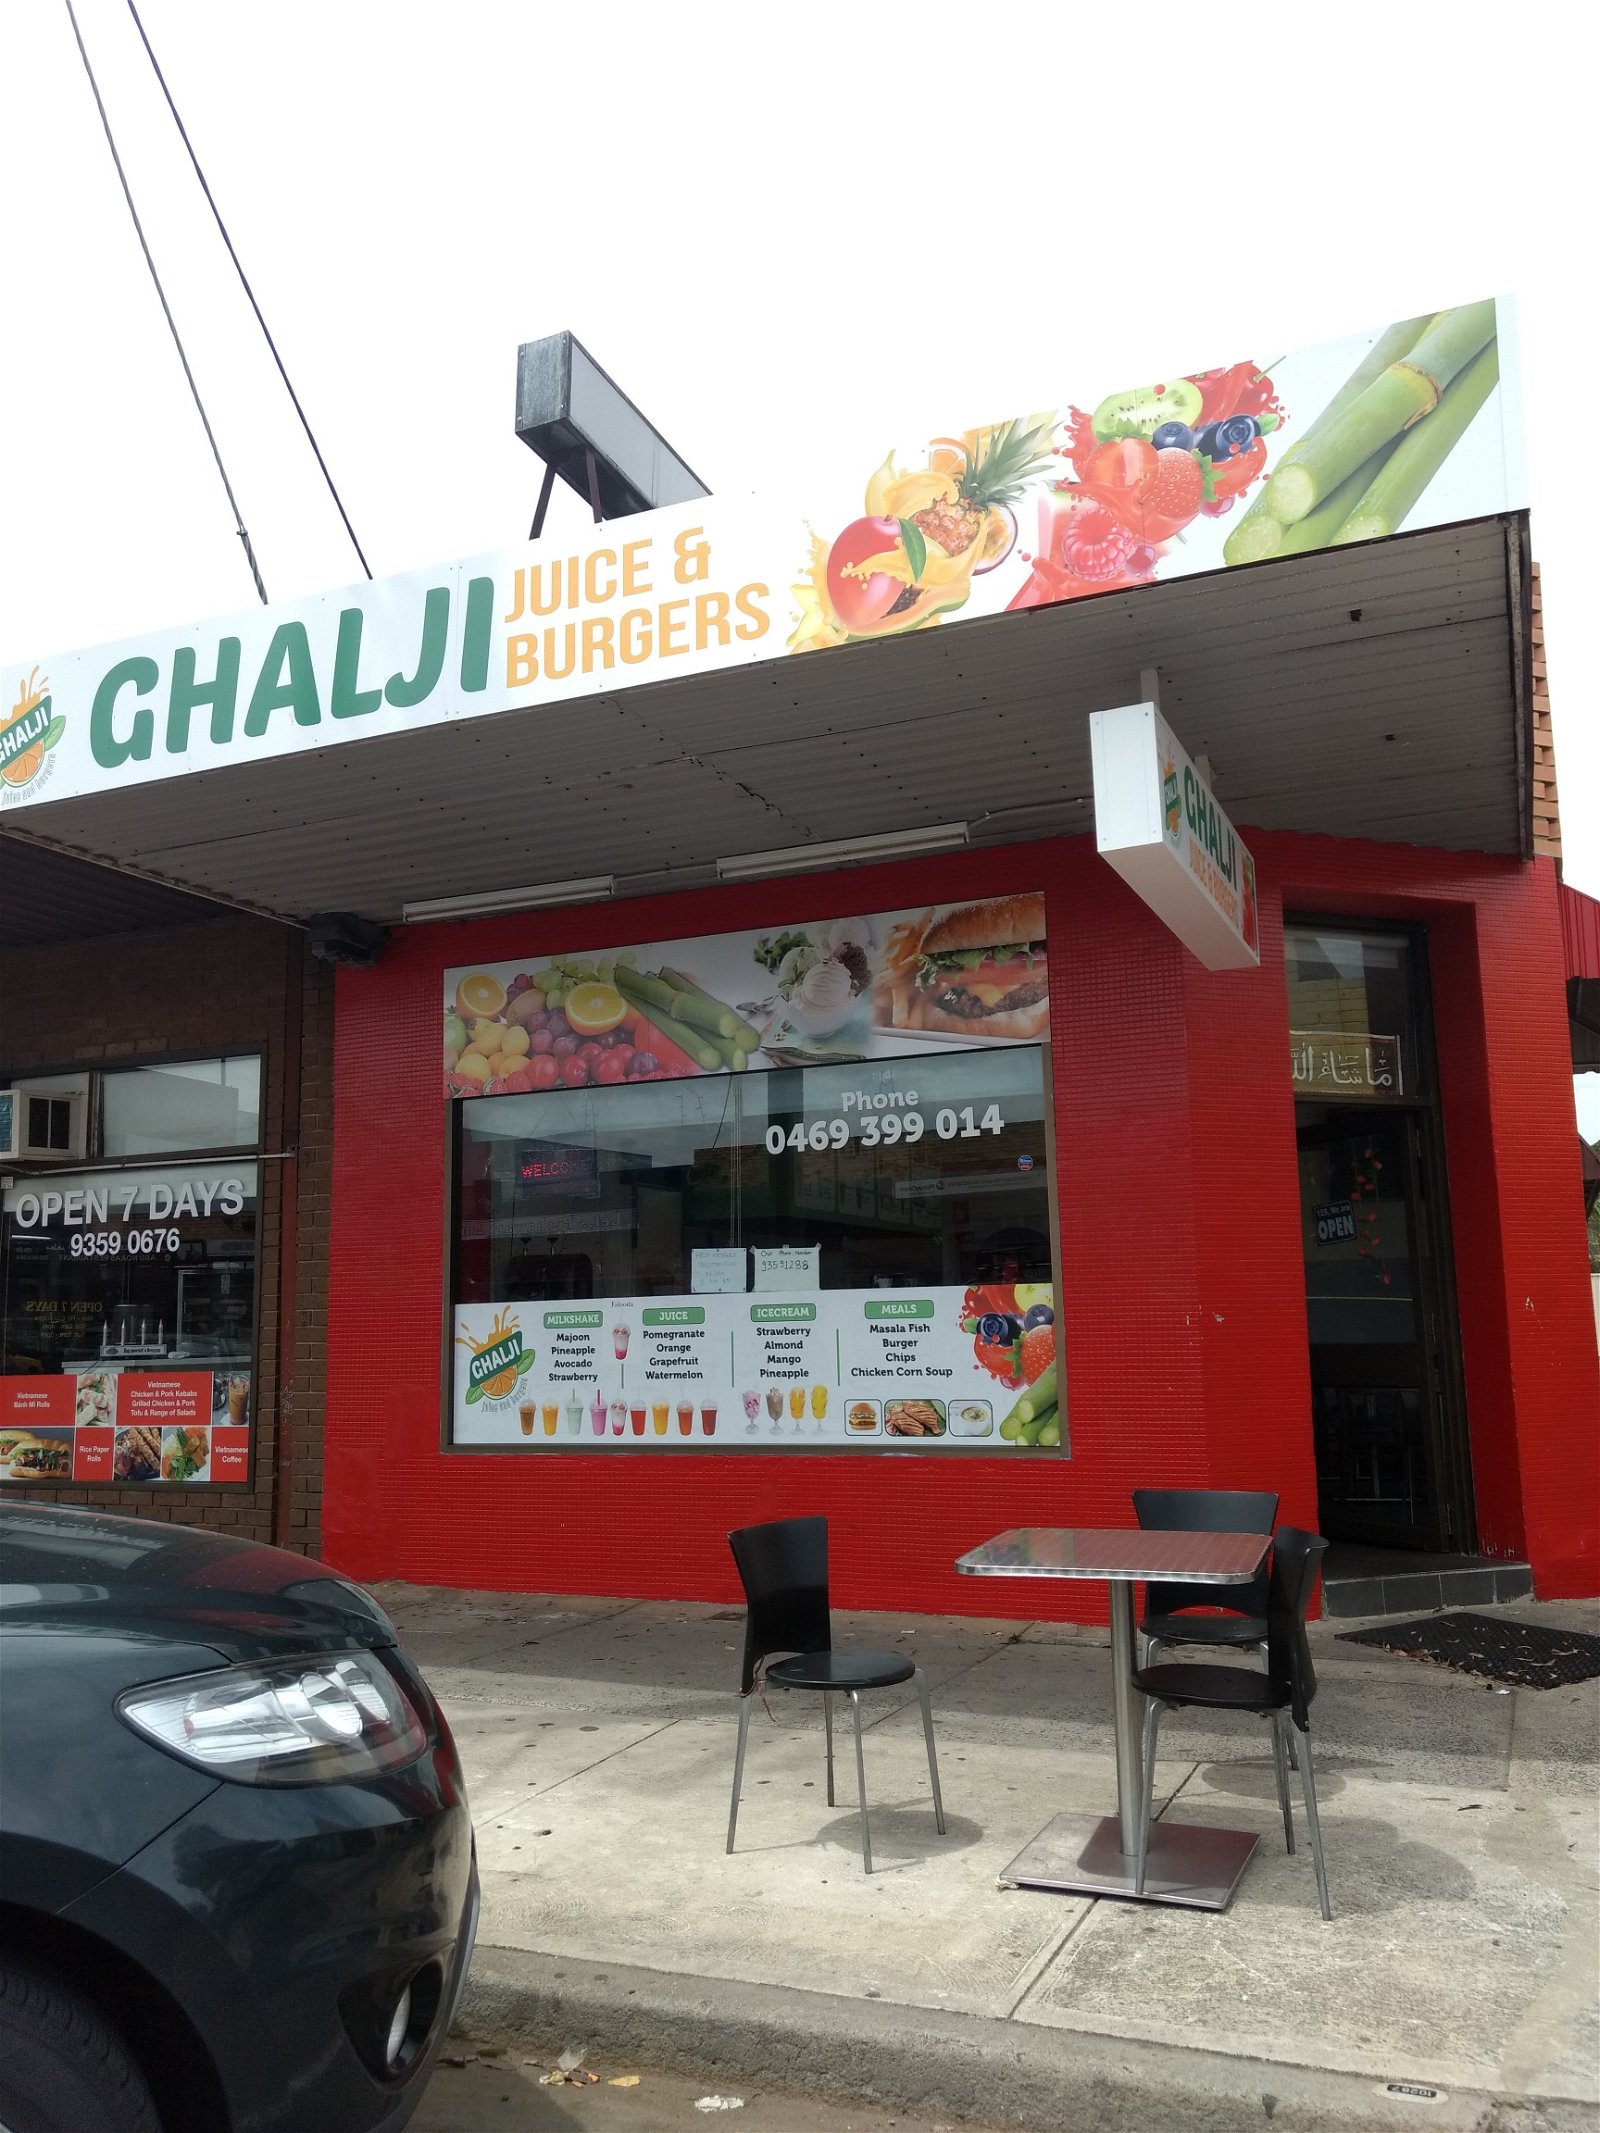 Ghalji Juice  Burgers - Food Delivery Shop